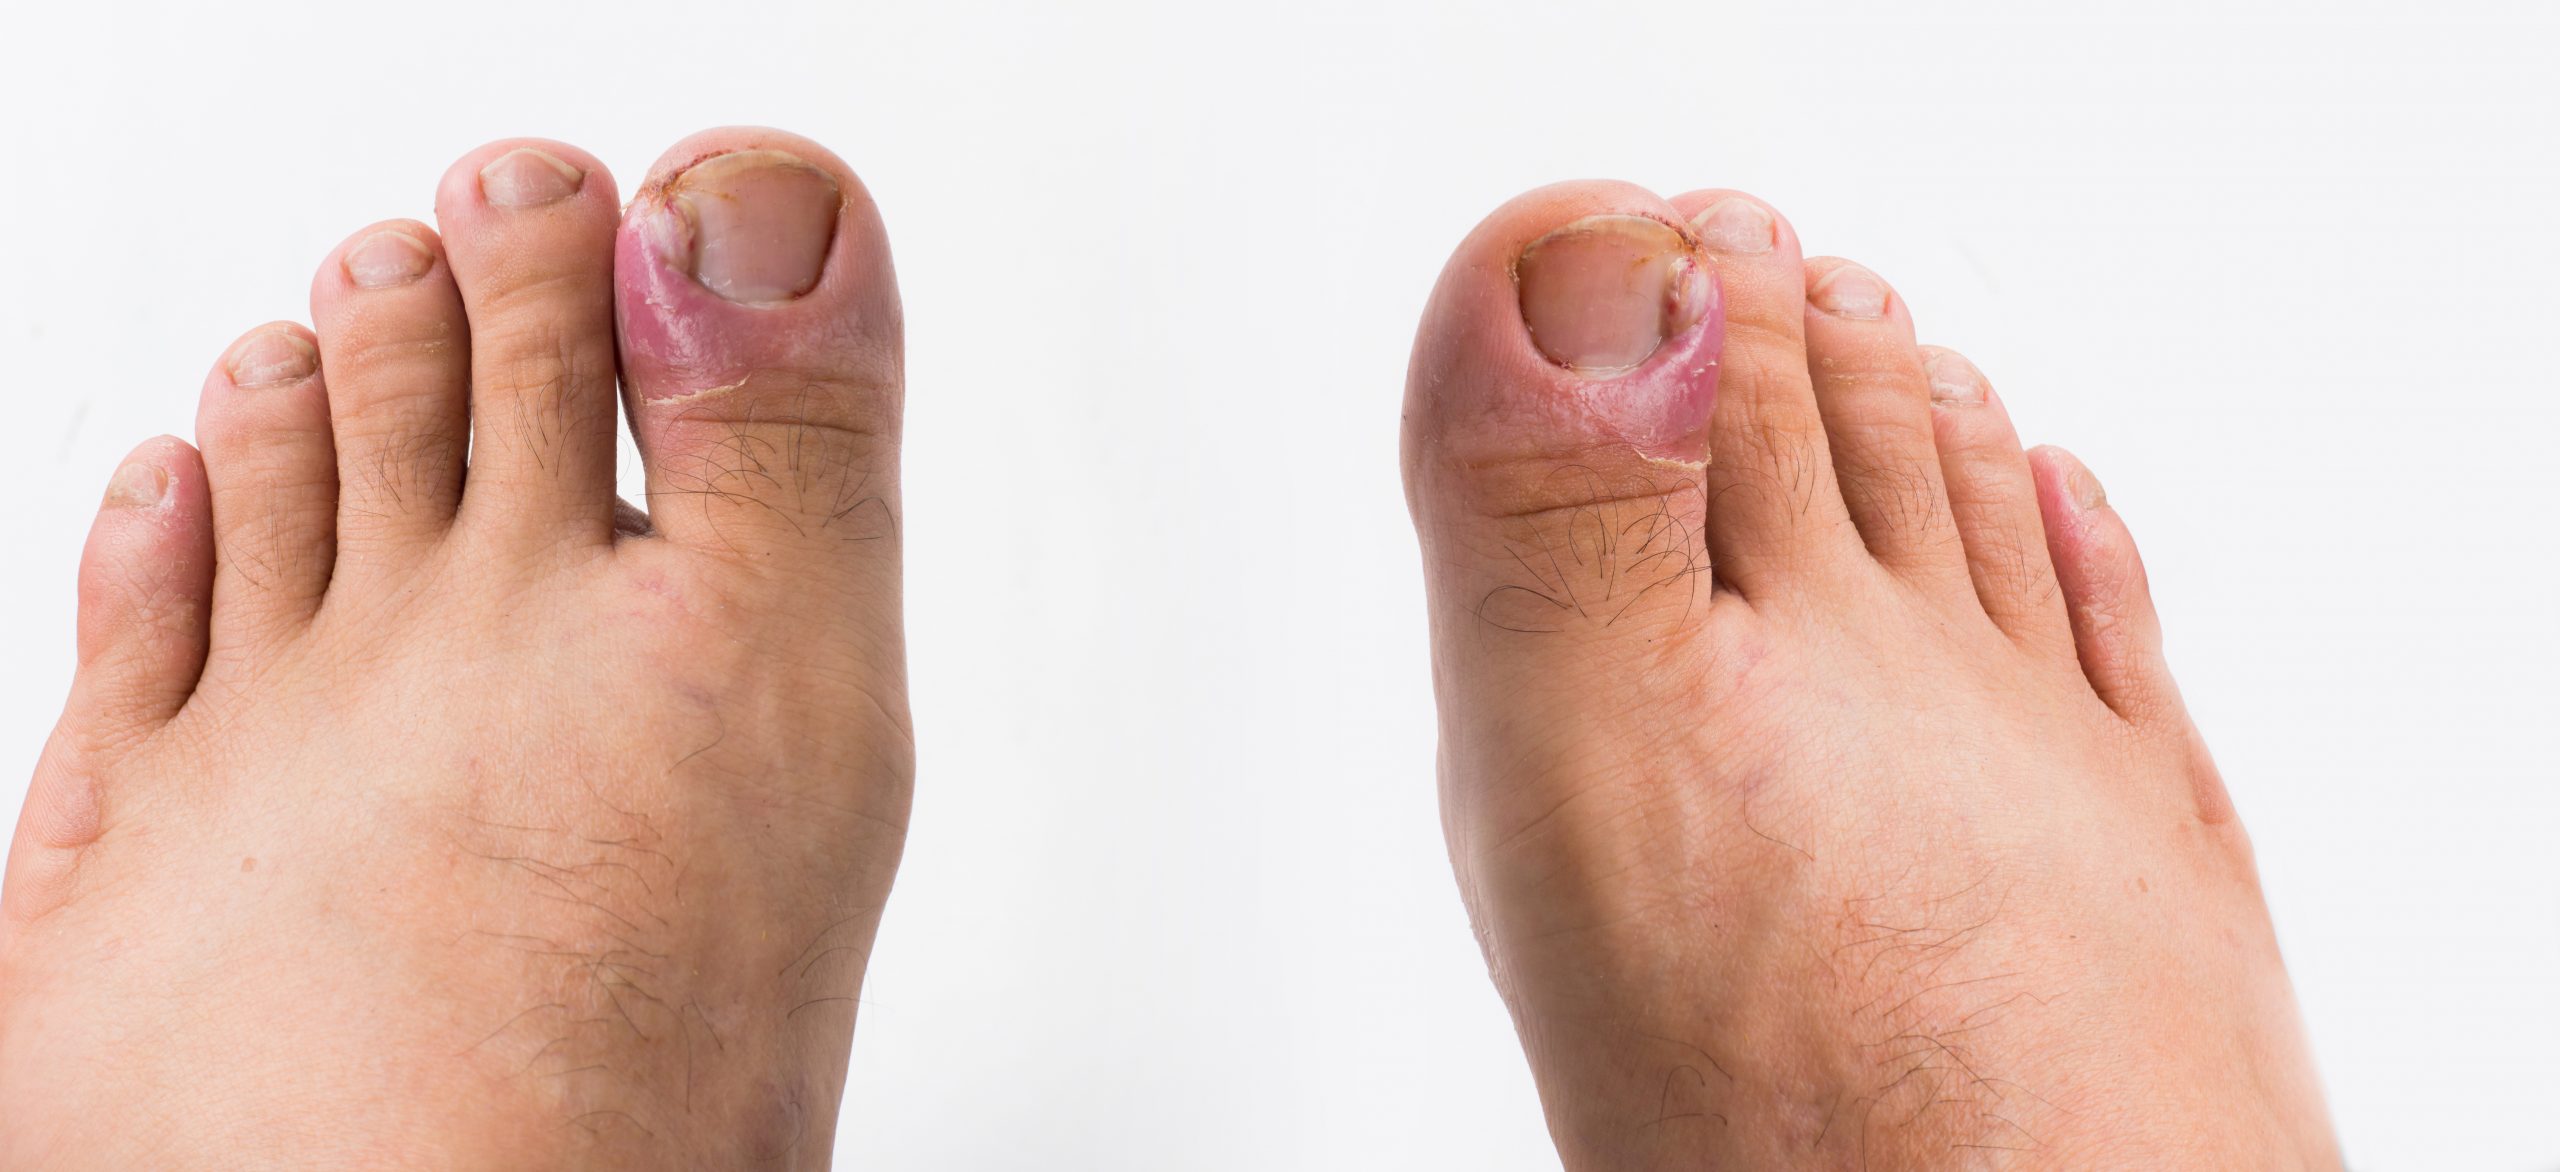 Treatments for paronychia of the toe